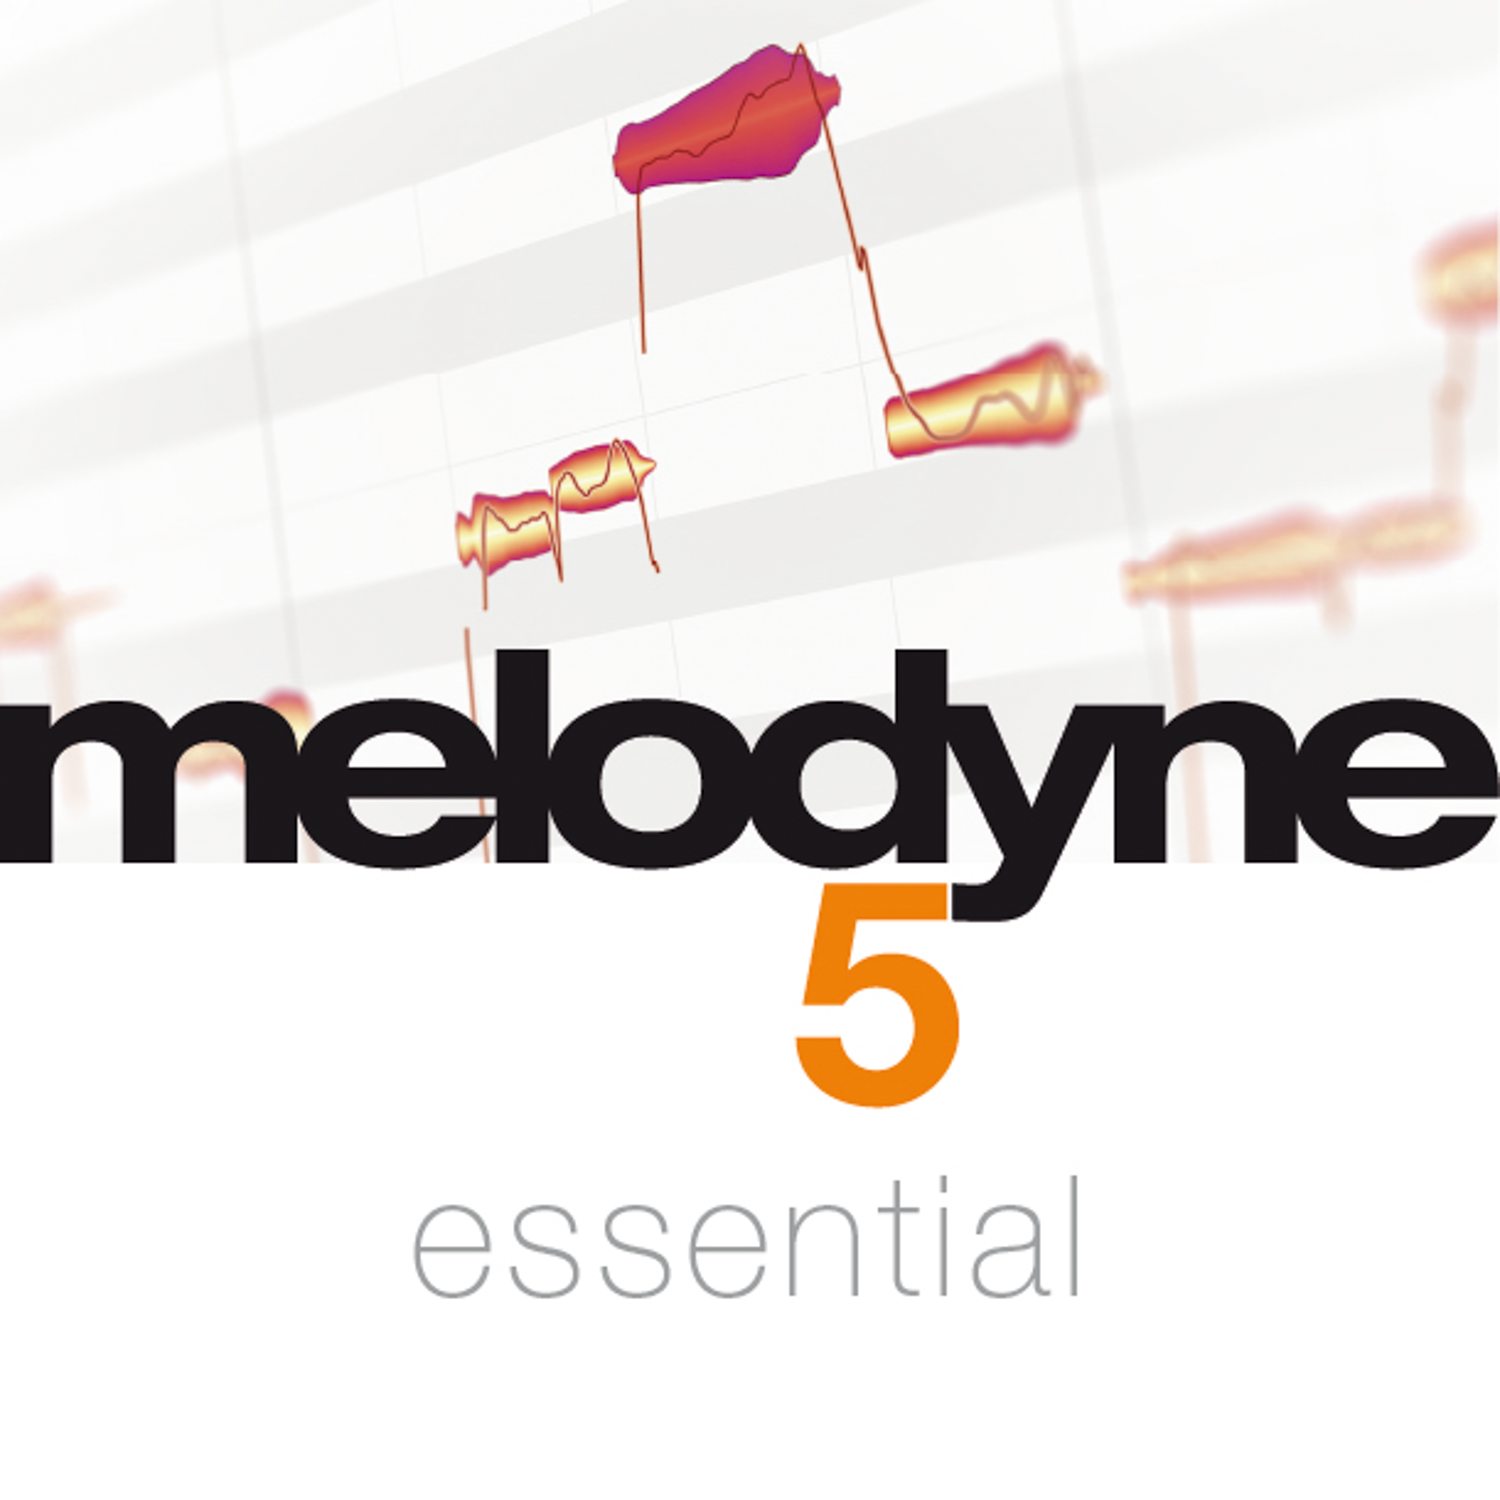 Celemony Melodyne 5 Essential (Latest Version)